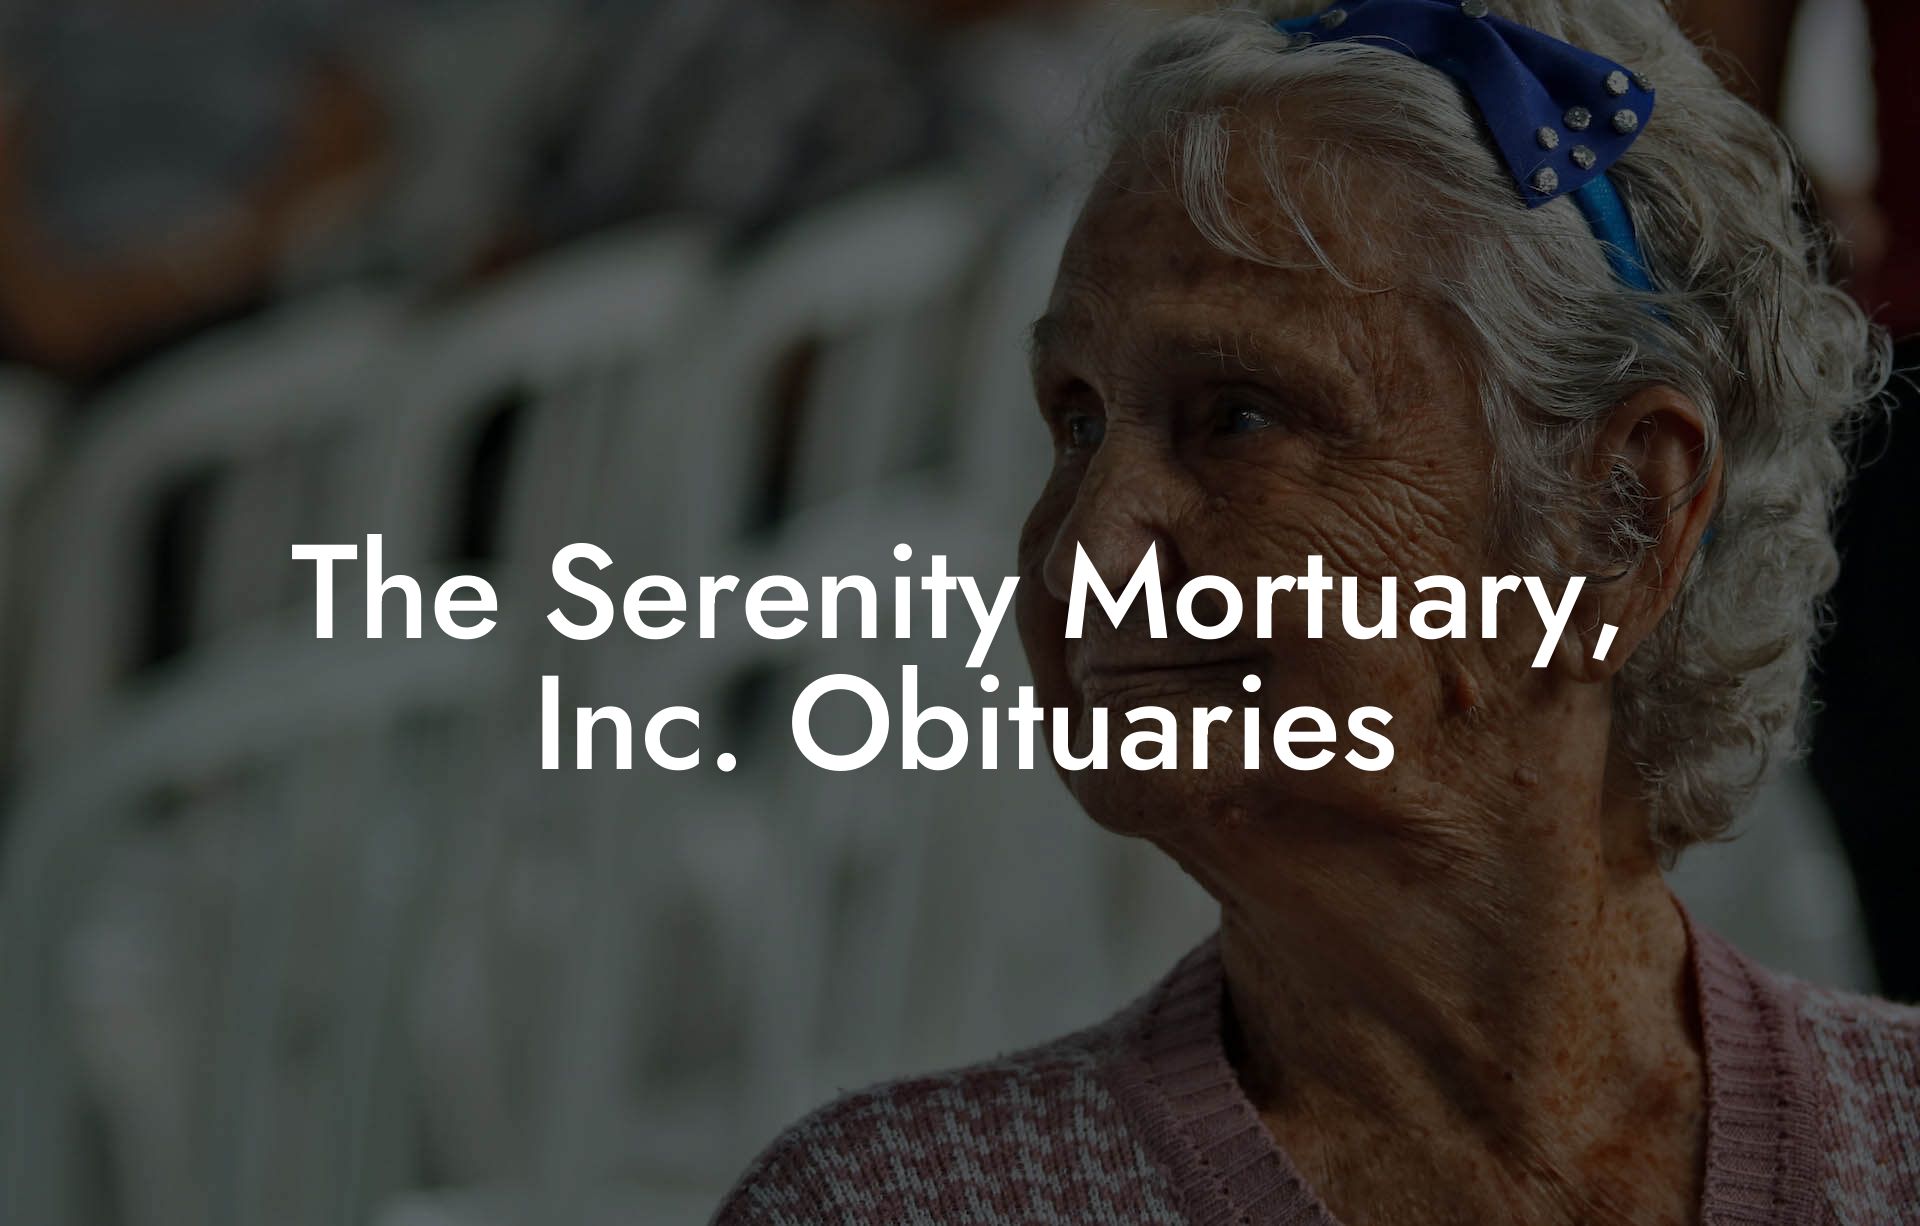 The Serenity Mortuary, Inc. Obituaries